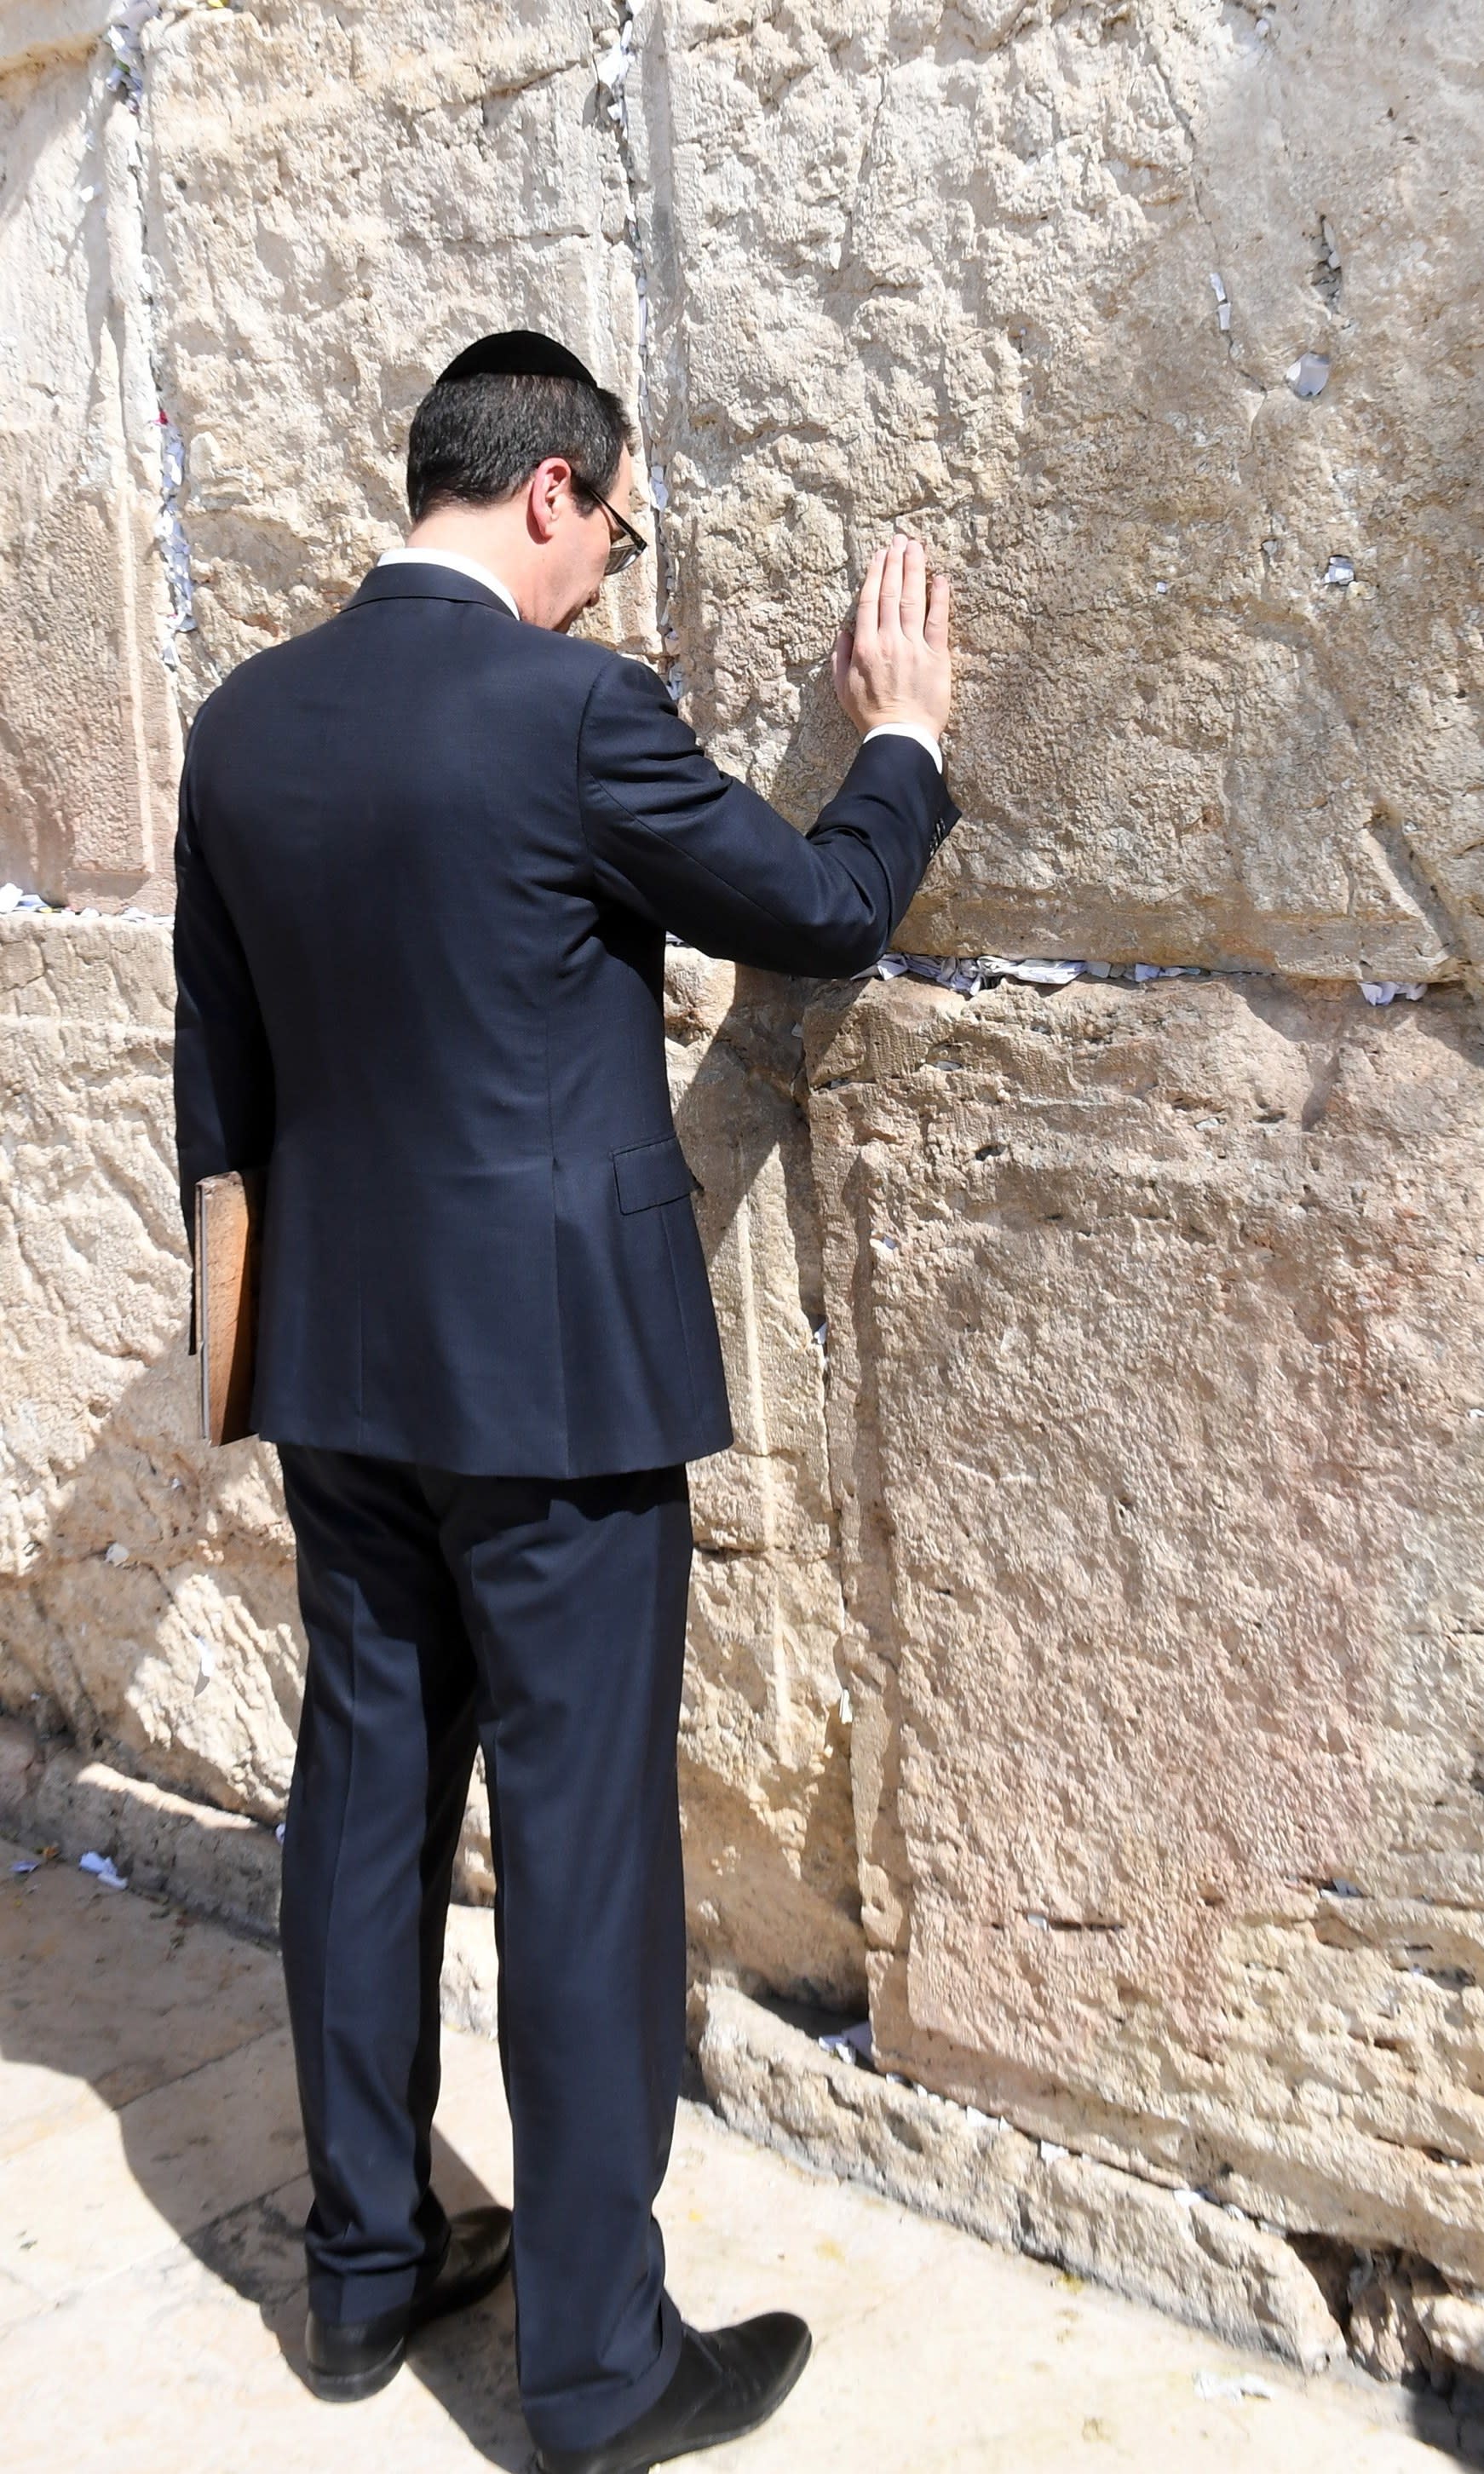 Treasury Secretary Steve Mnuchin at the Western Wall (Credit: Matty Stern / US Embassy Tel Aviv)